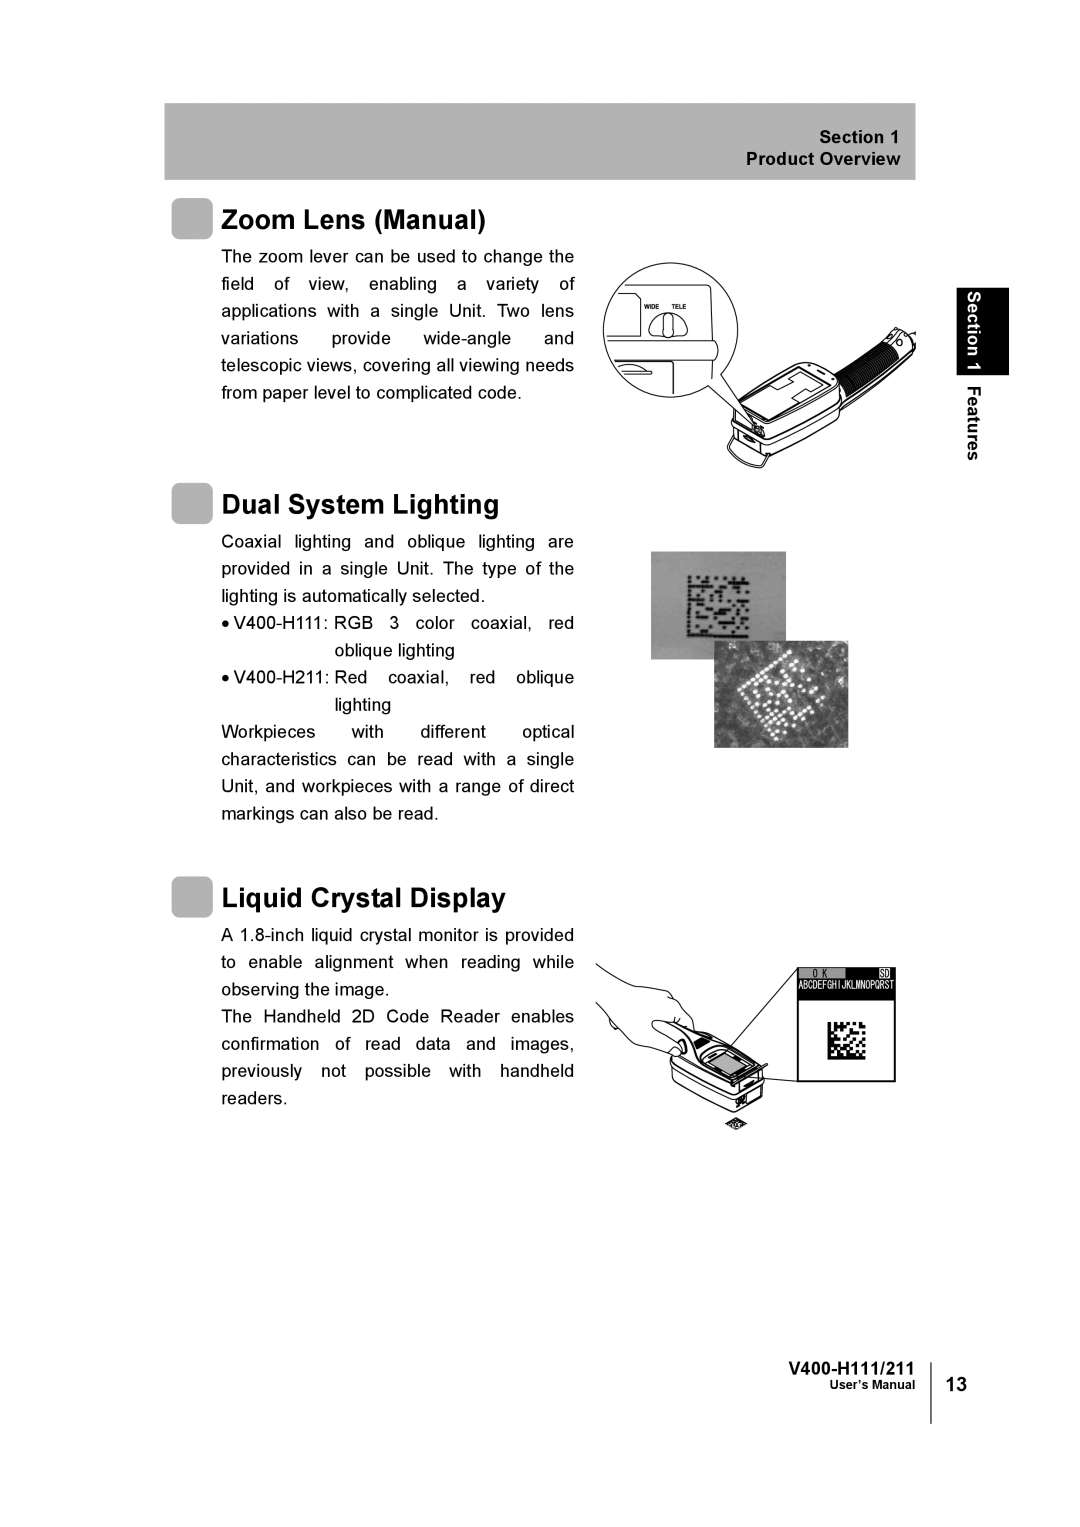 Omron V400-H111 user manual Zoom Lens Manual, Dual System Lighting, Liquid Crystal Display 